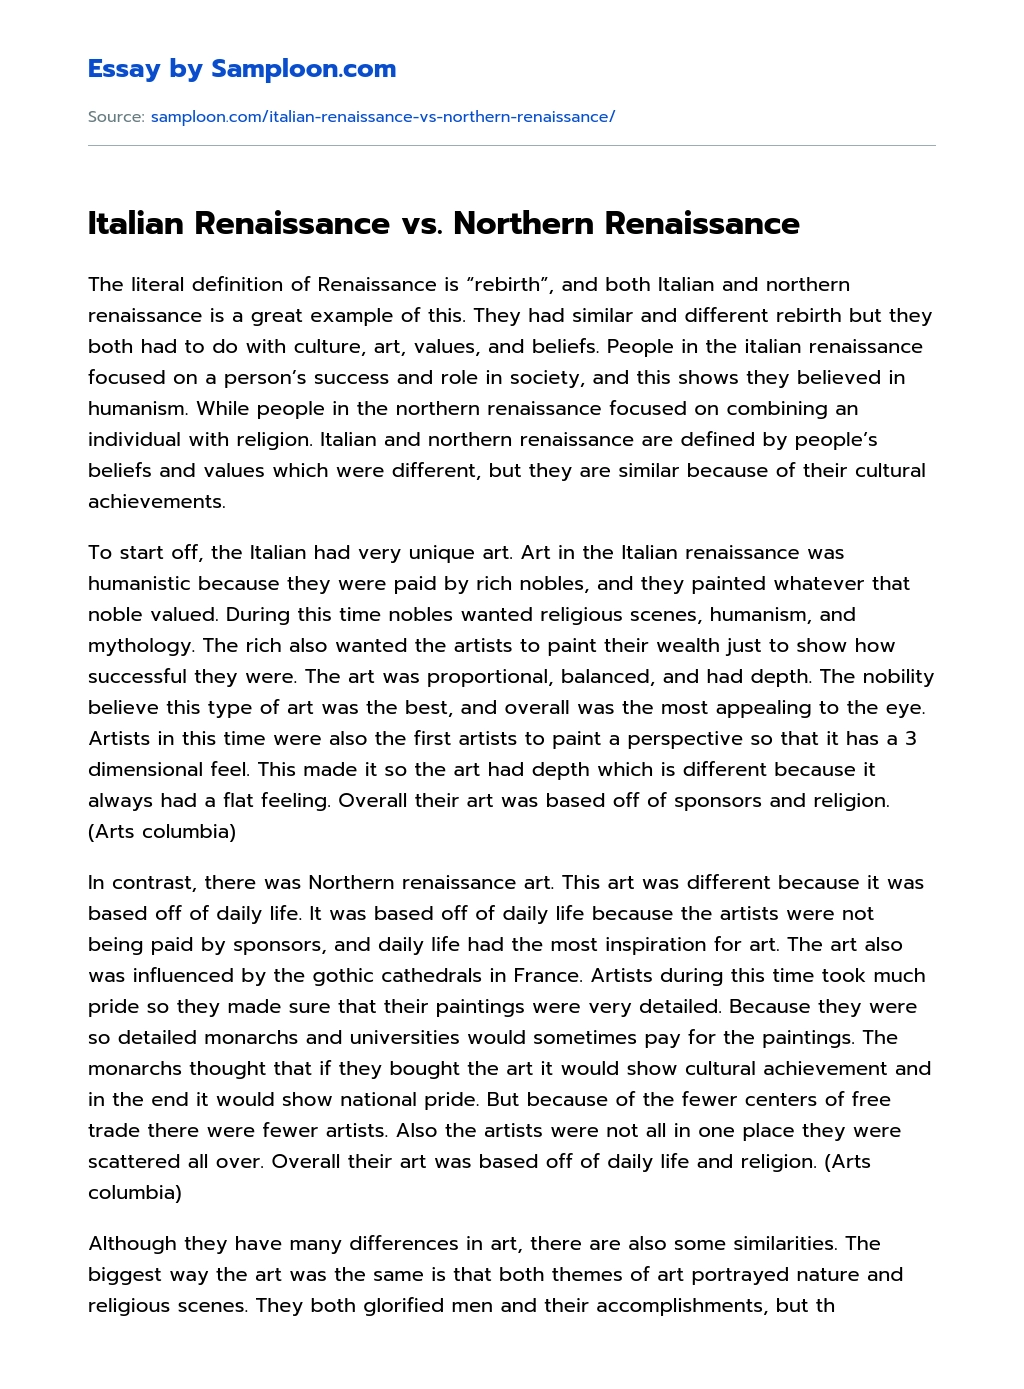 Italian Renaissance vs. Northern Renaissance essay